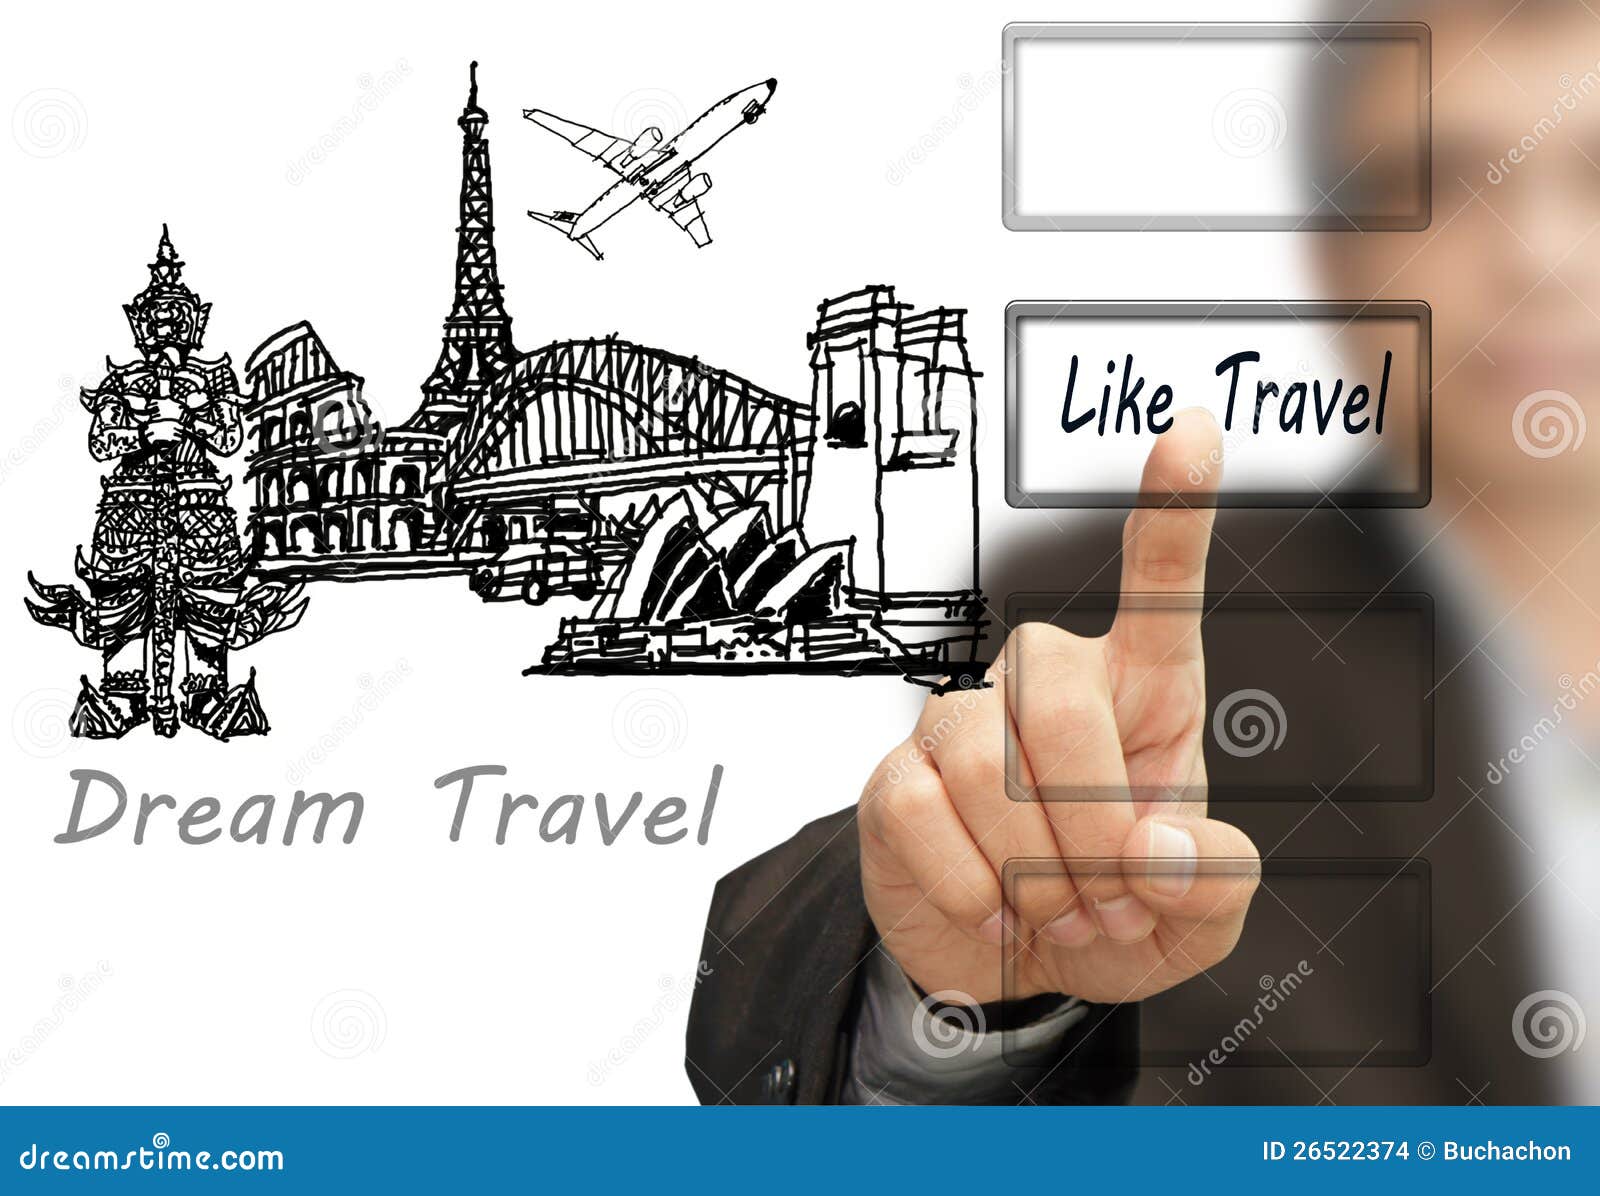 Like&Travel. Like Travel франшиза. Samo Travel. Dream Travel. Travel like 12